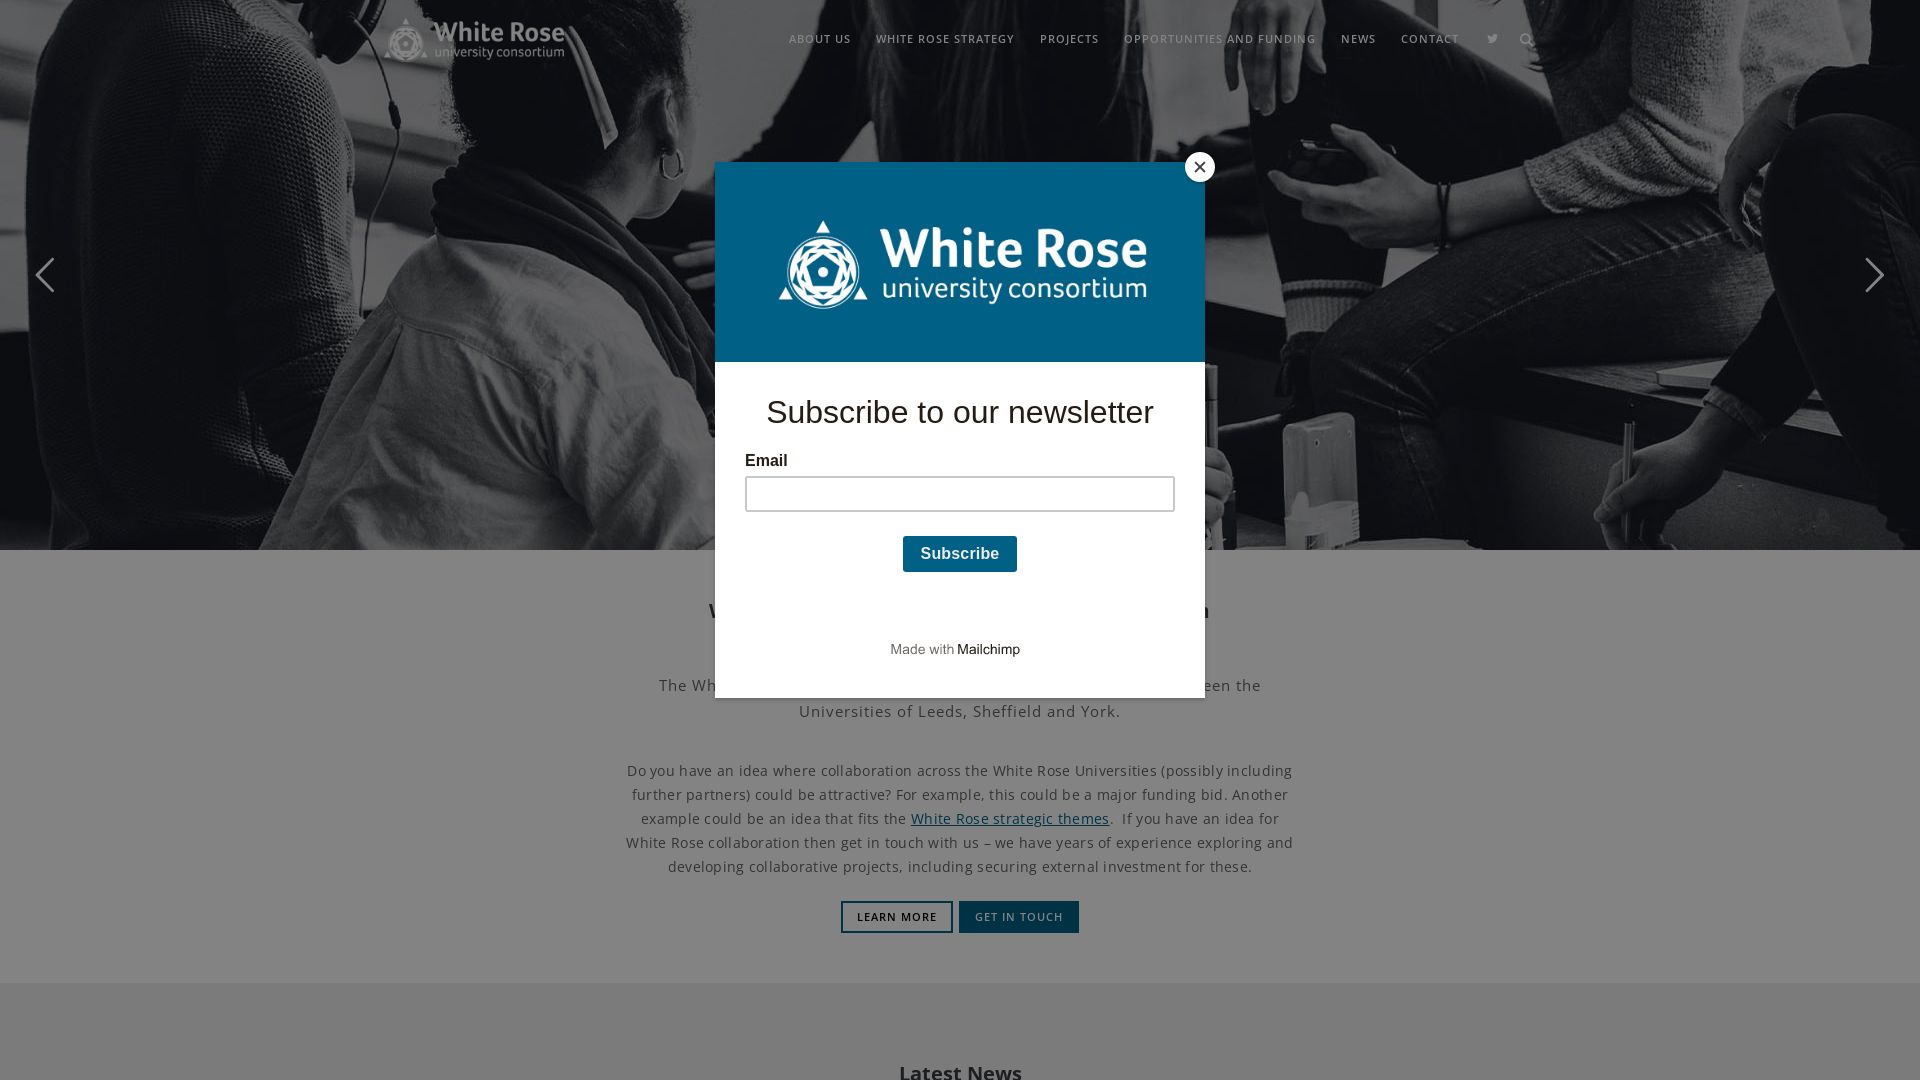 Website status whiterose.ac.uk is   ONLINE